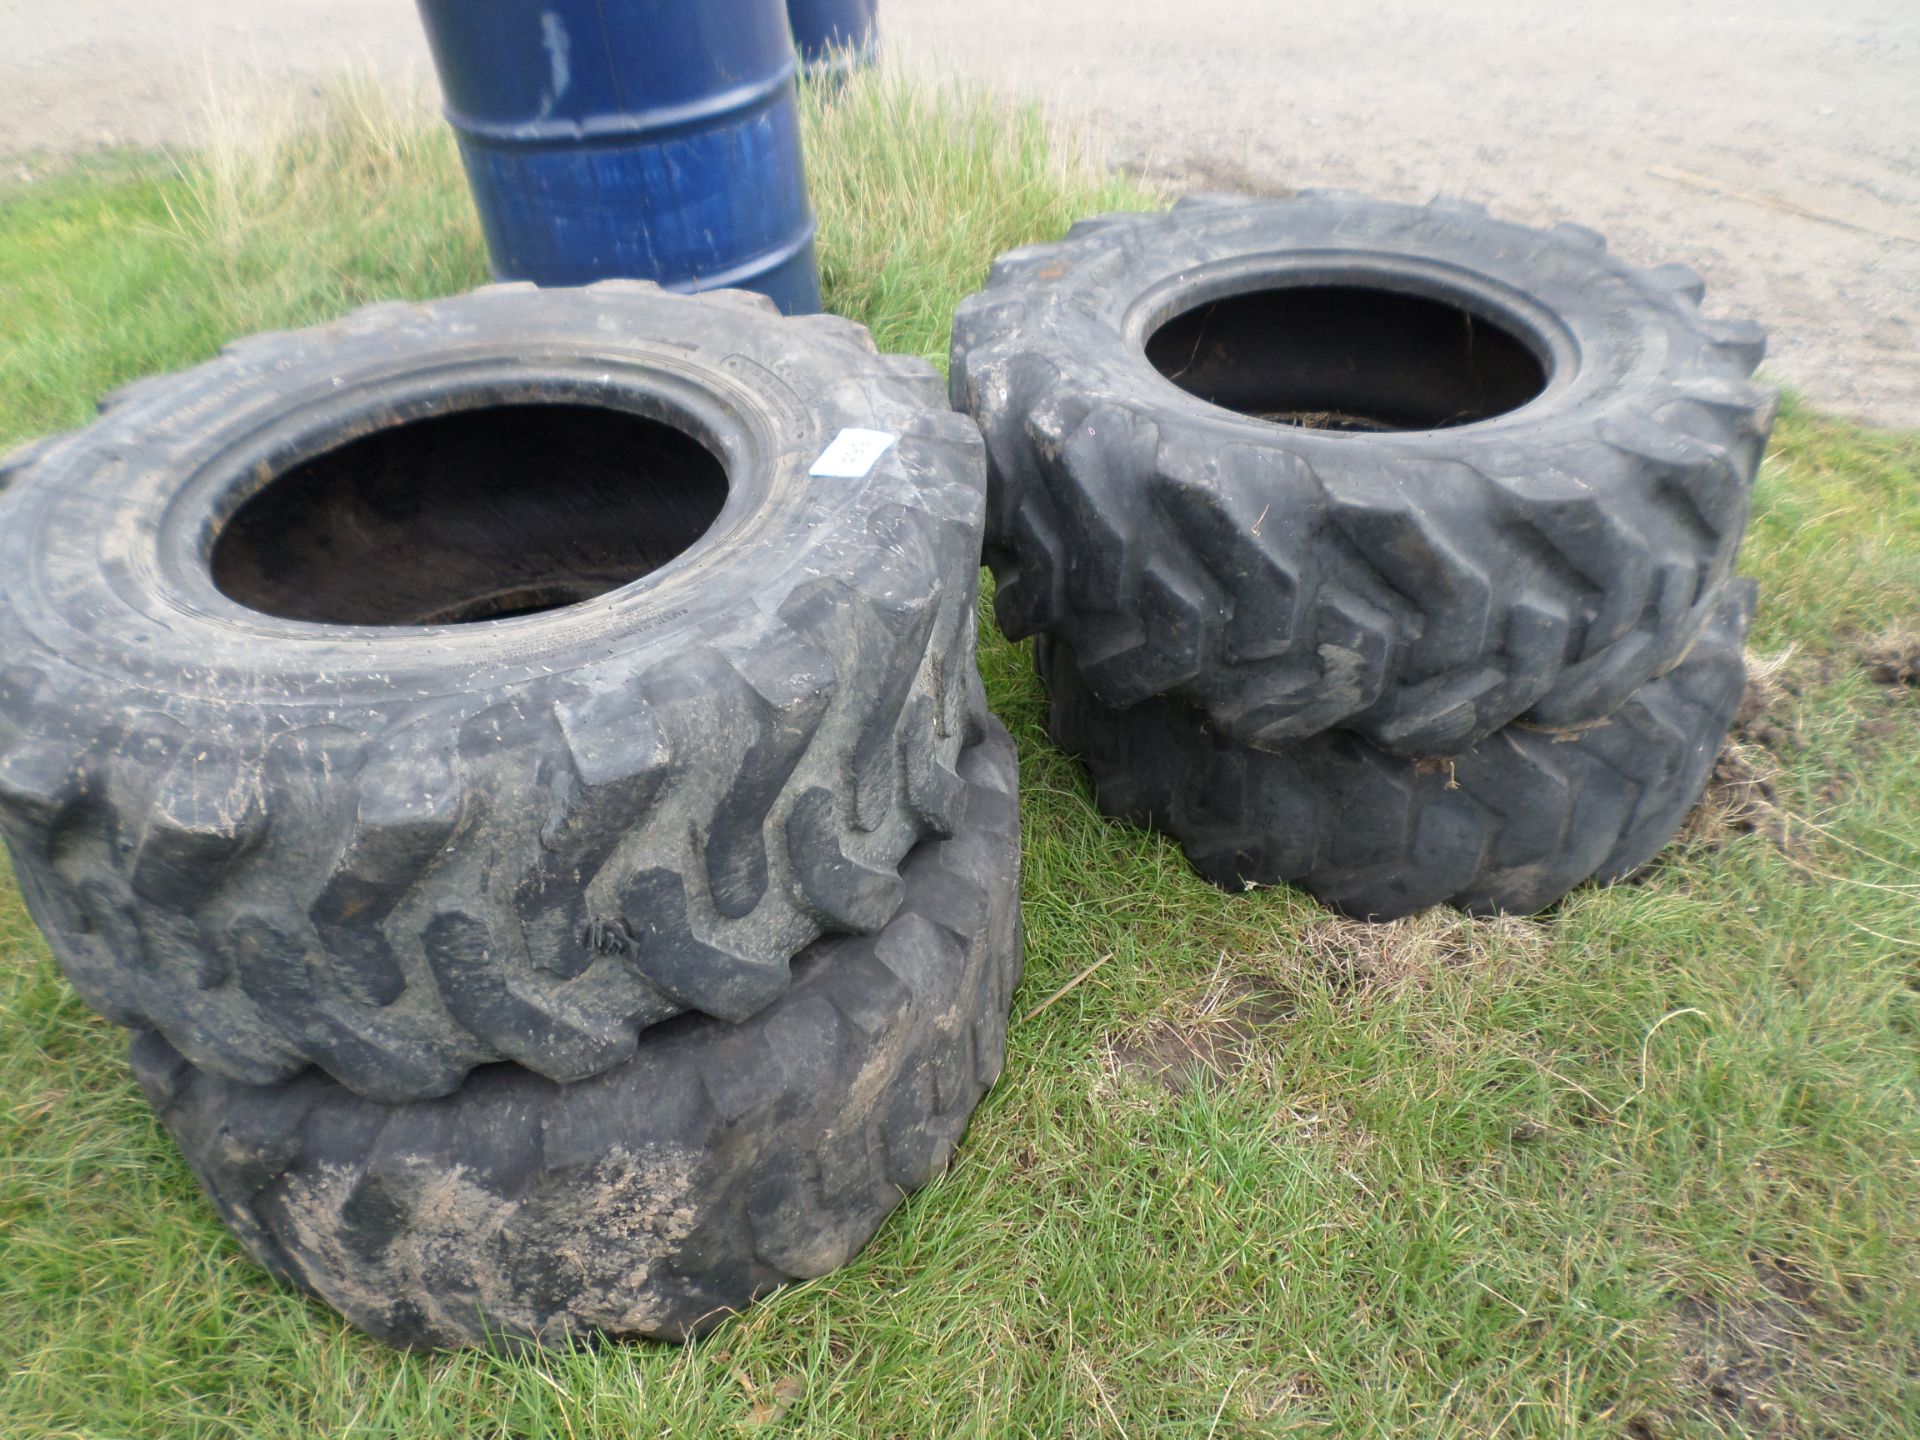 4 x 12.5/80/18 JCB tyres